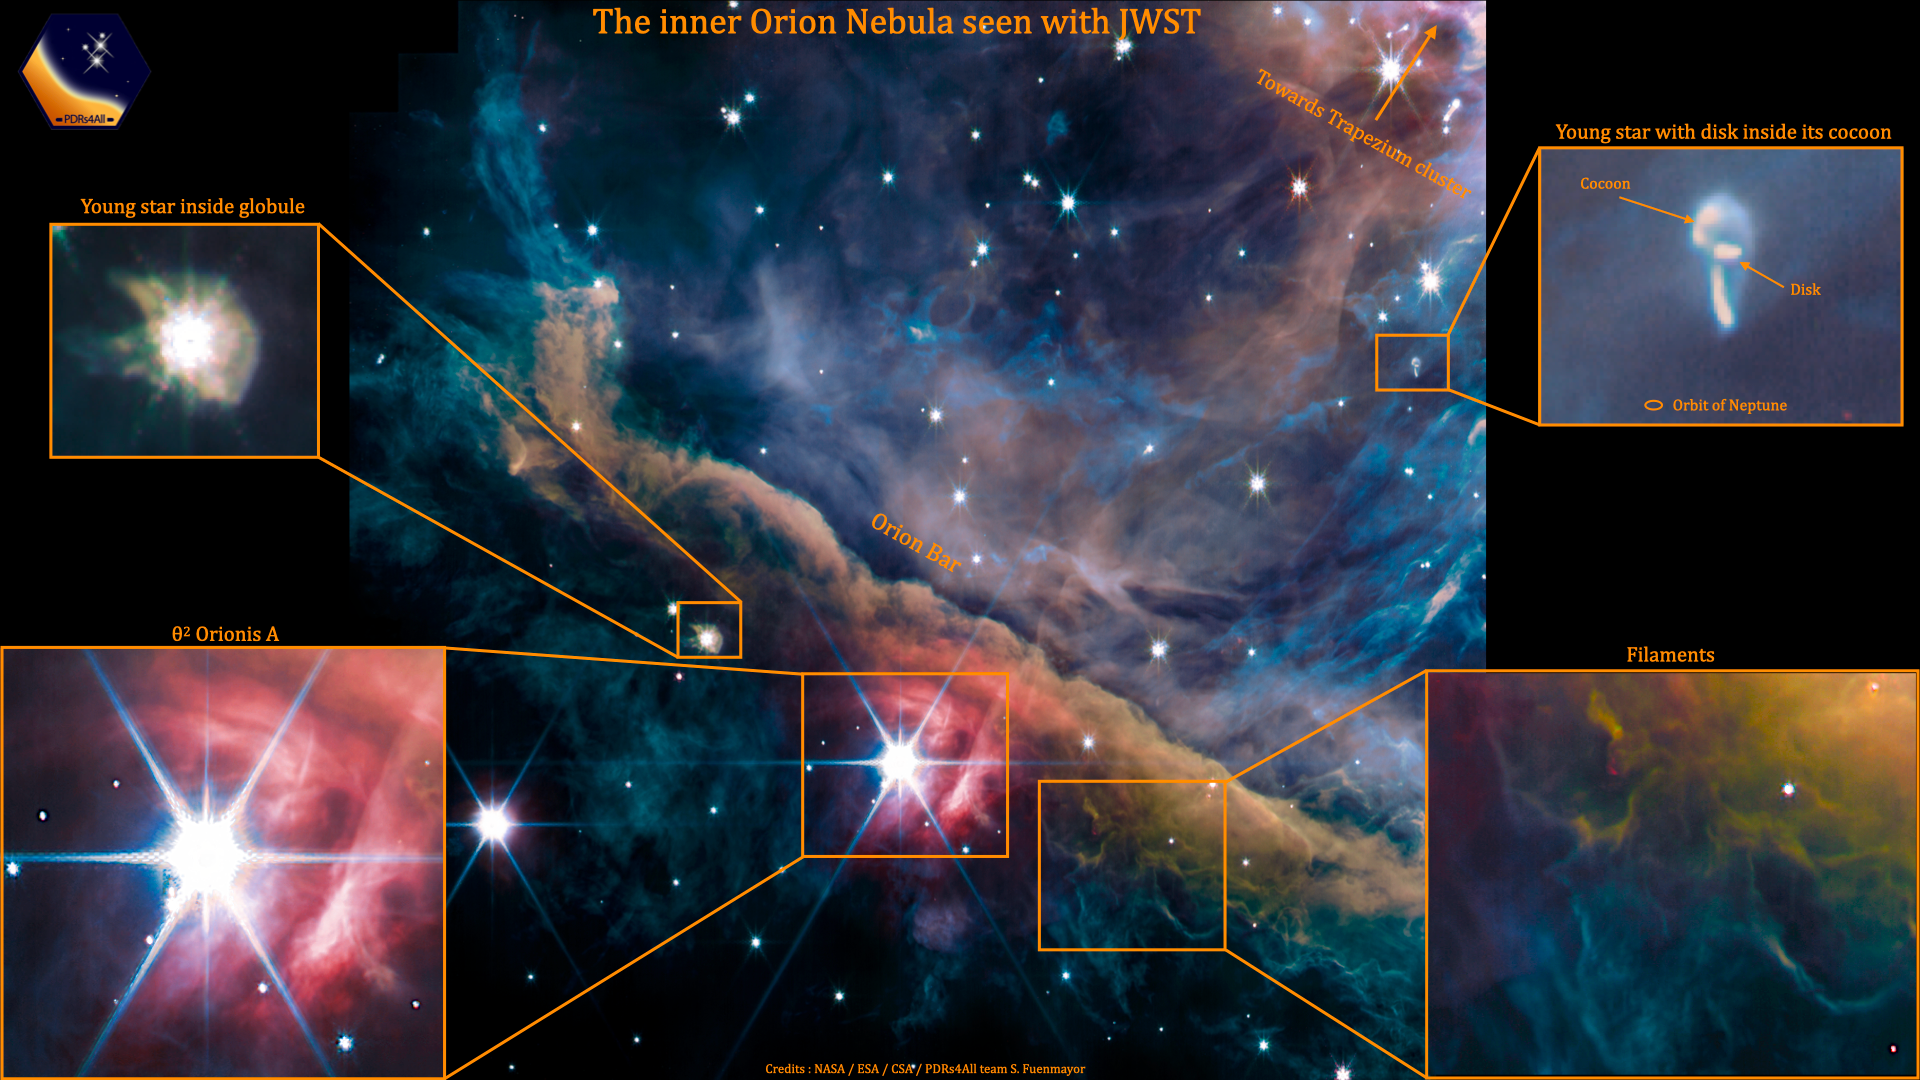 jwst-nebula-orion